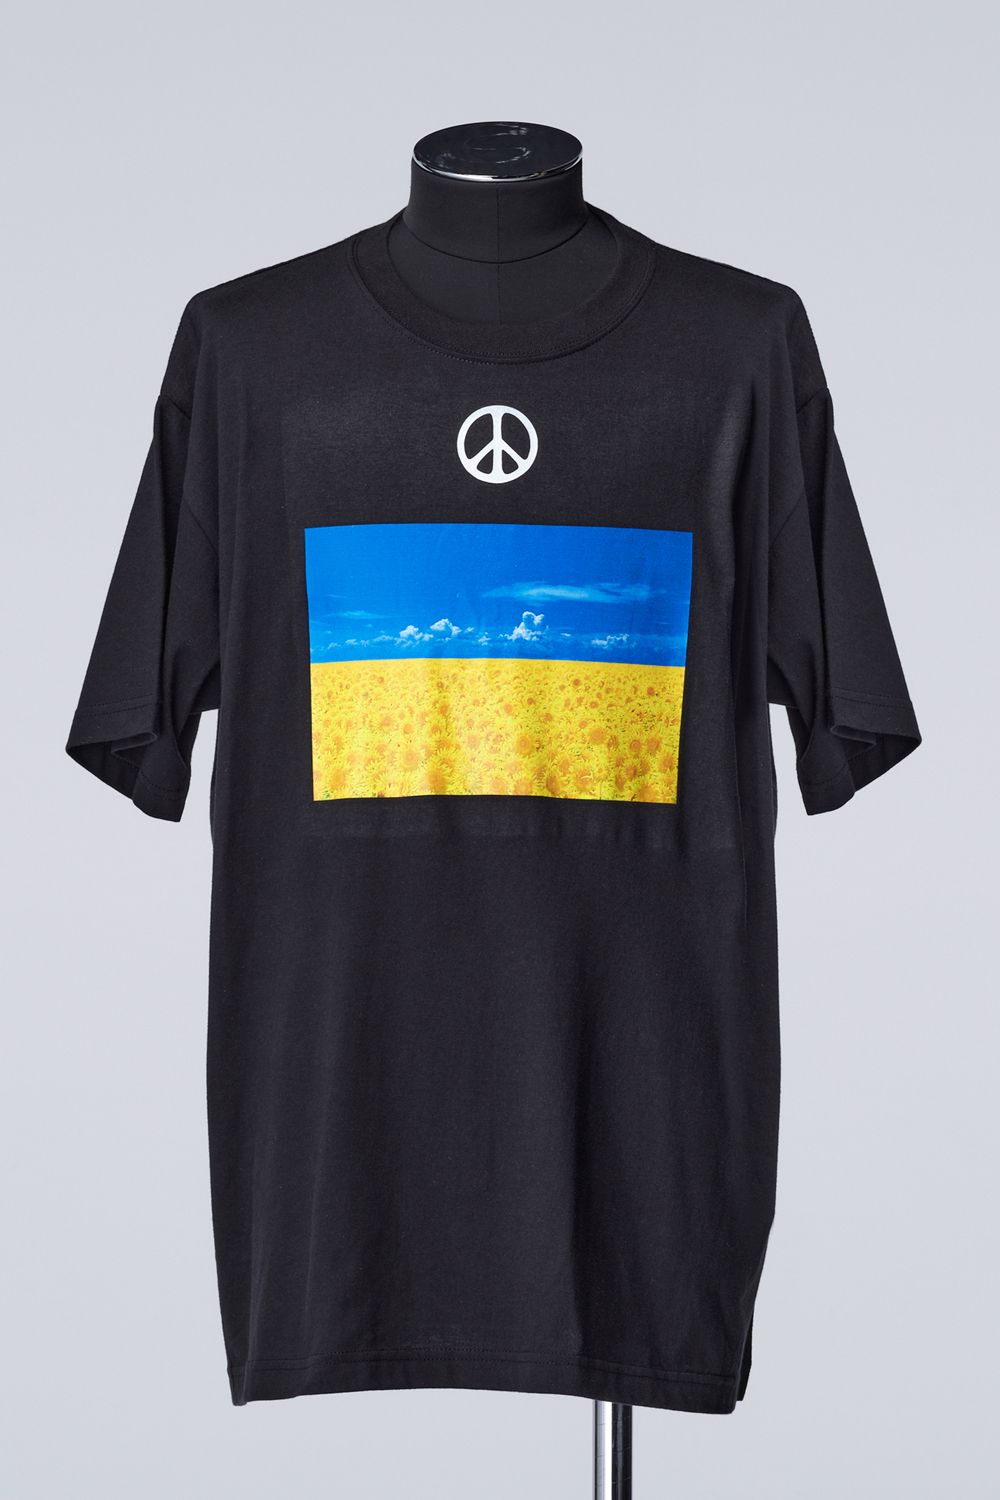 THE ONENESS - Ukraine Charity T-Shirt | laid-back